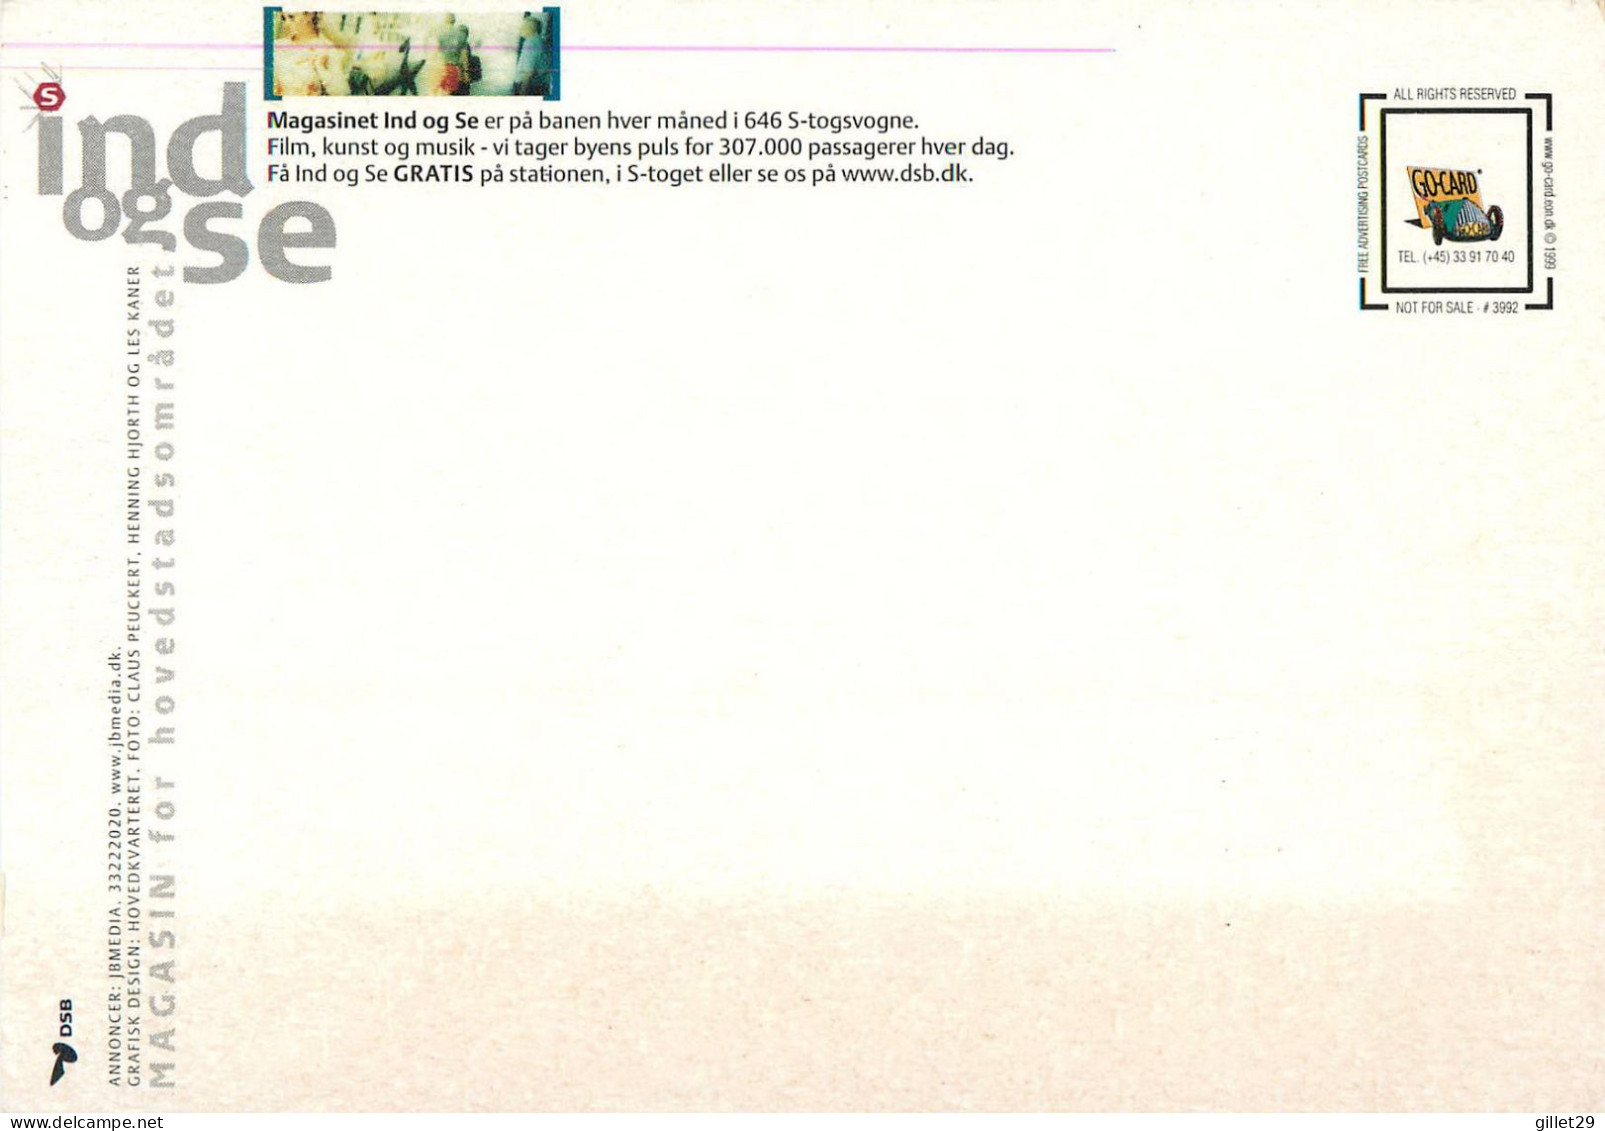 ADVERTISING, PUBLICITÉ - LE MAGAZINE VENEZ VOIR - MAGASINET IND OG SE - GO-CARD 1999 No 3992 - - Werbepostkarten